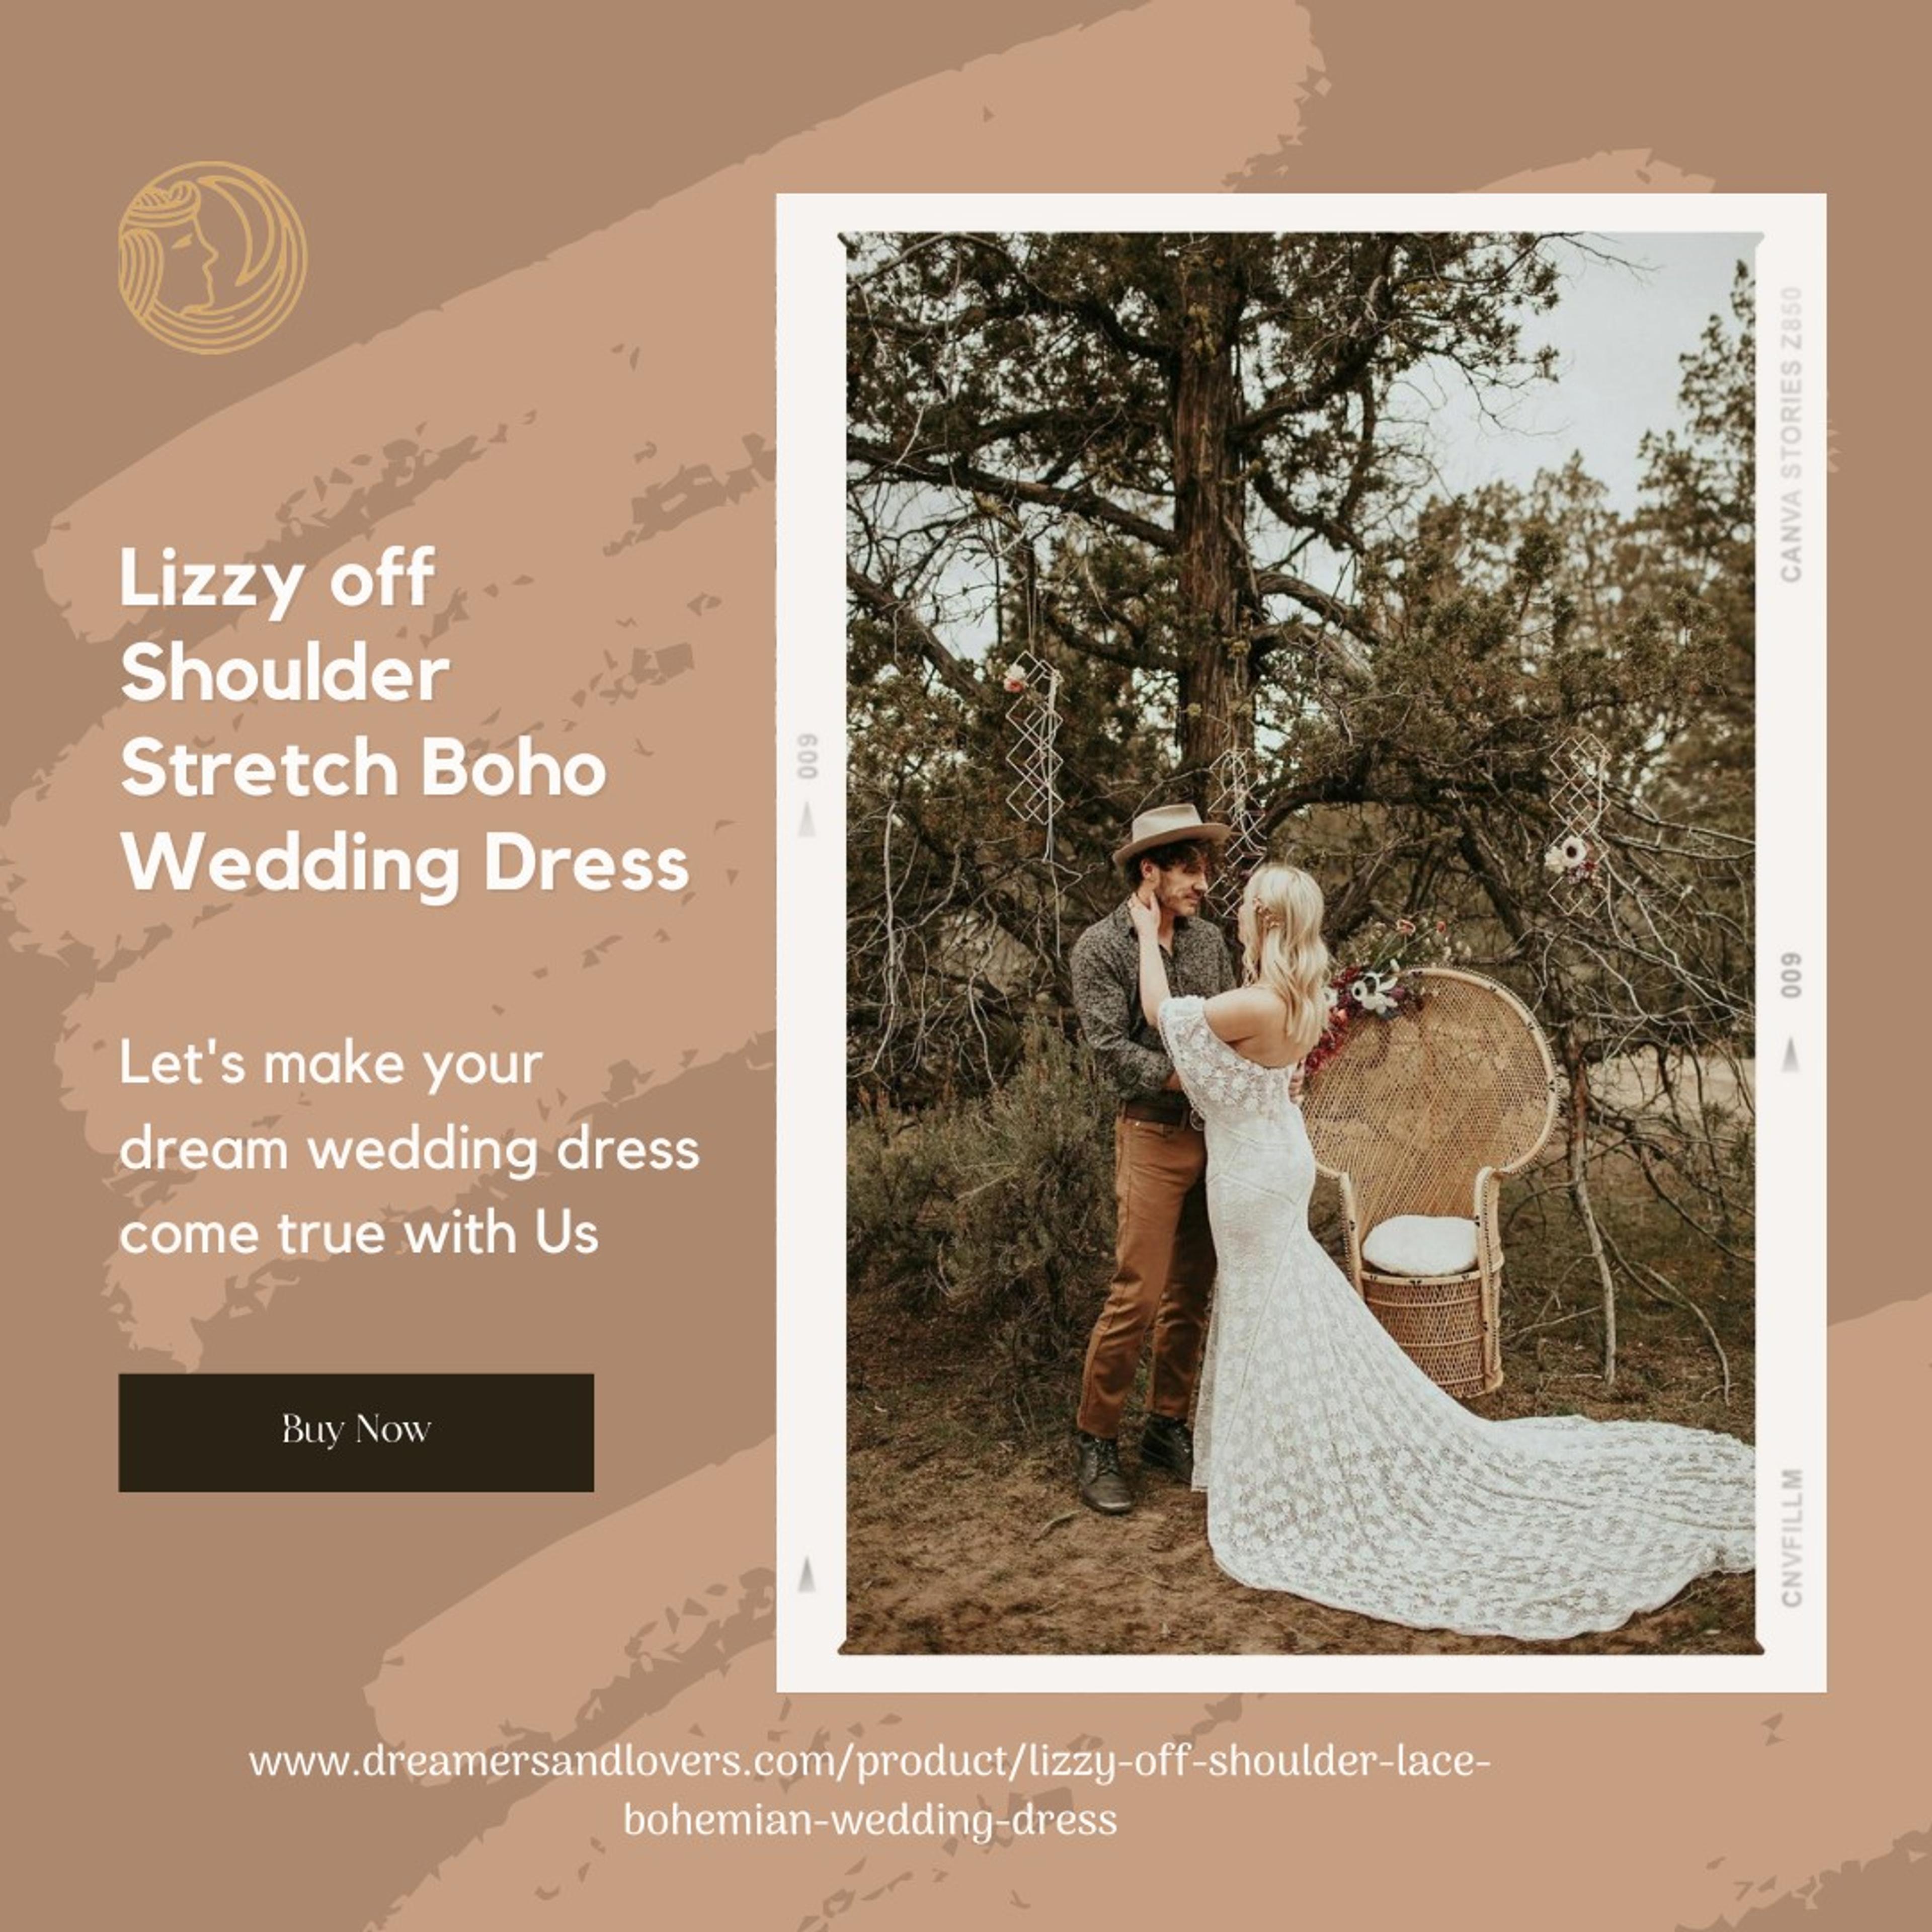 dreamersandlovers.com/product/lizzy-off-shoulder-lace-bohemian-wedding-dress/